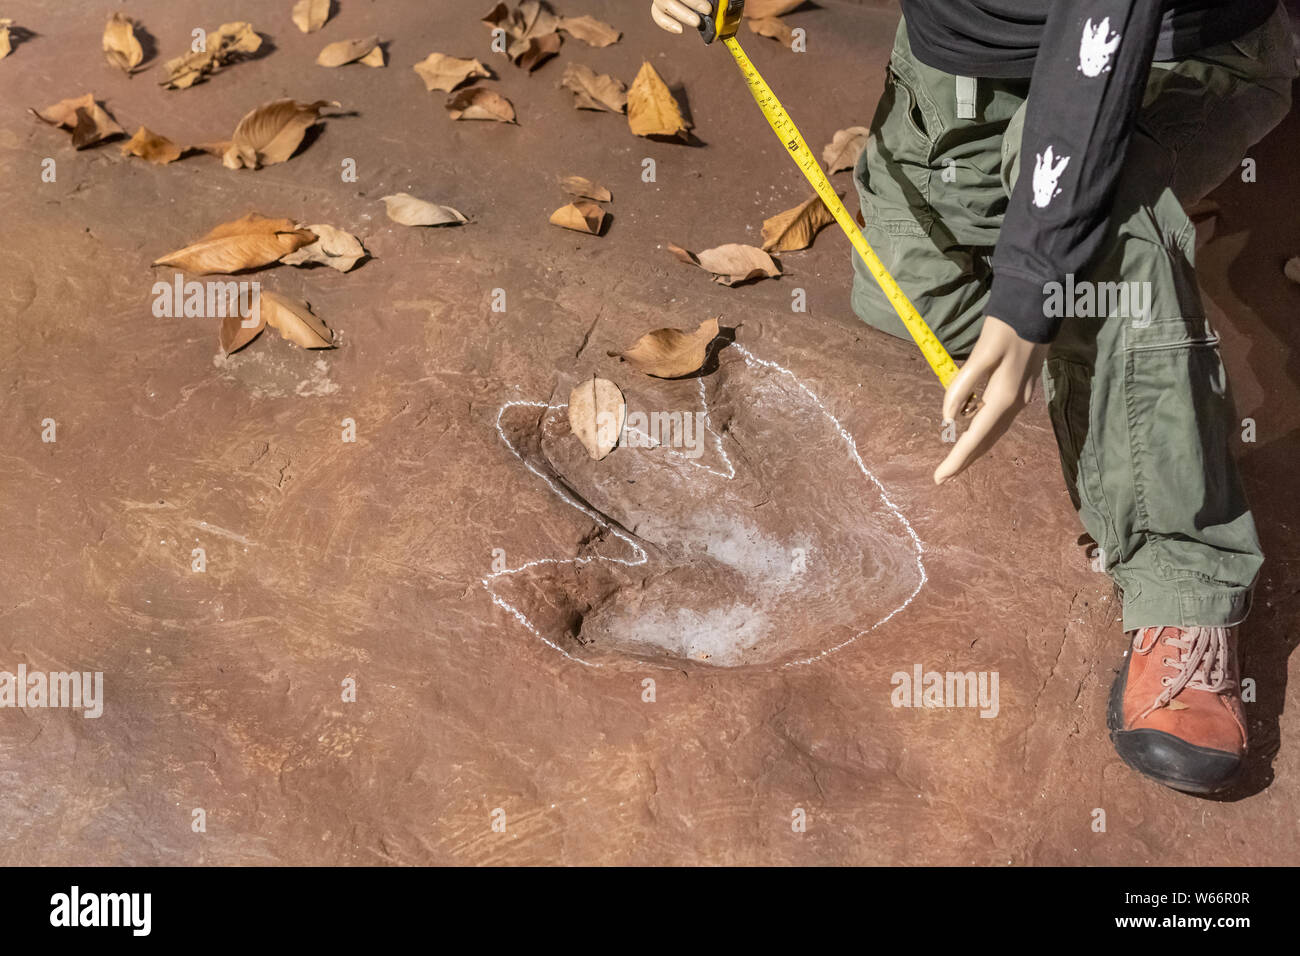 Sirindhorn Museum, Karasin Province Thailand - July 20, 2019: Explorers are measuring dinosaur footsteps. Stock Photo